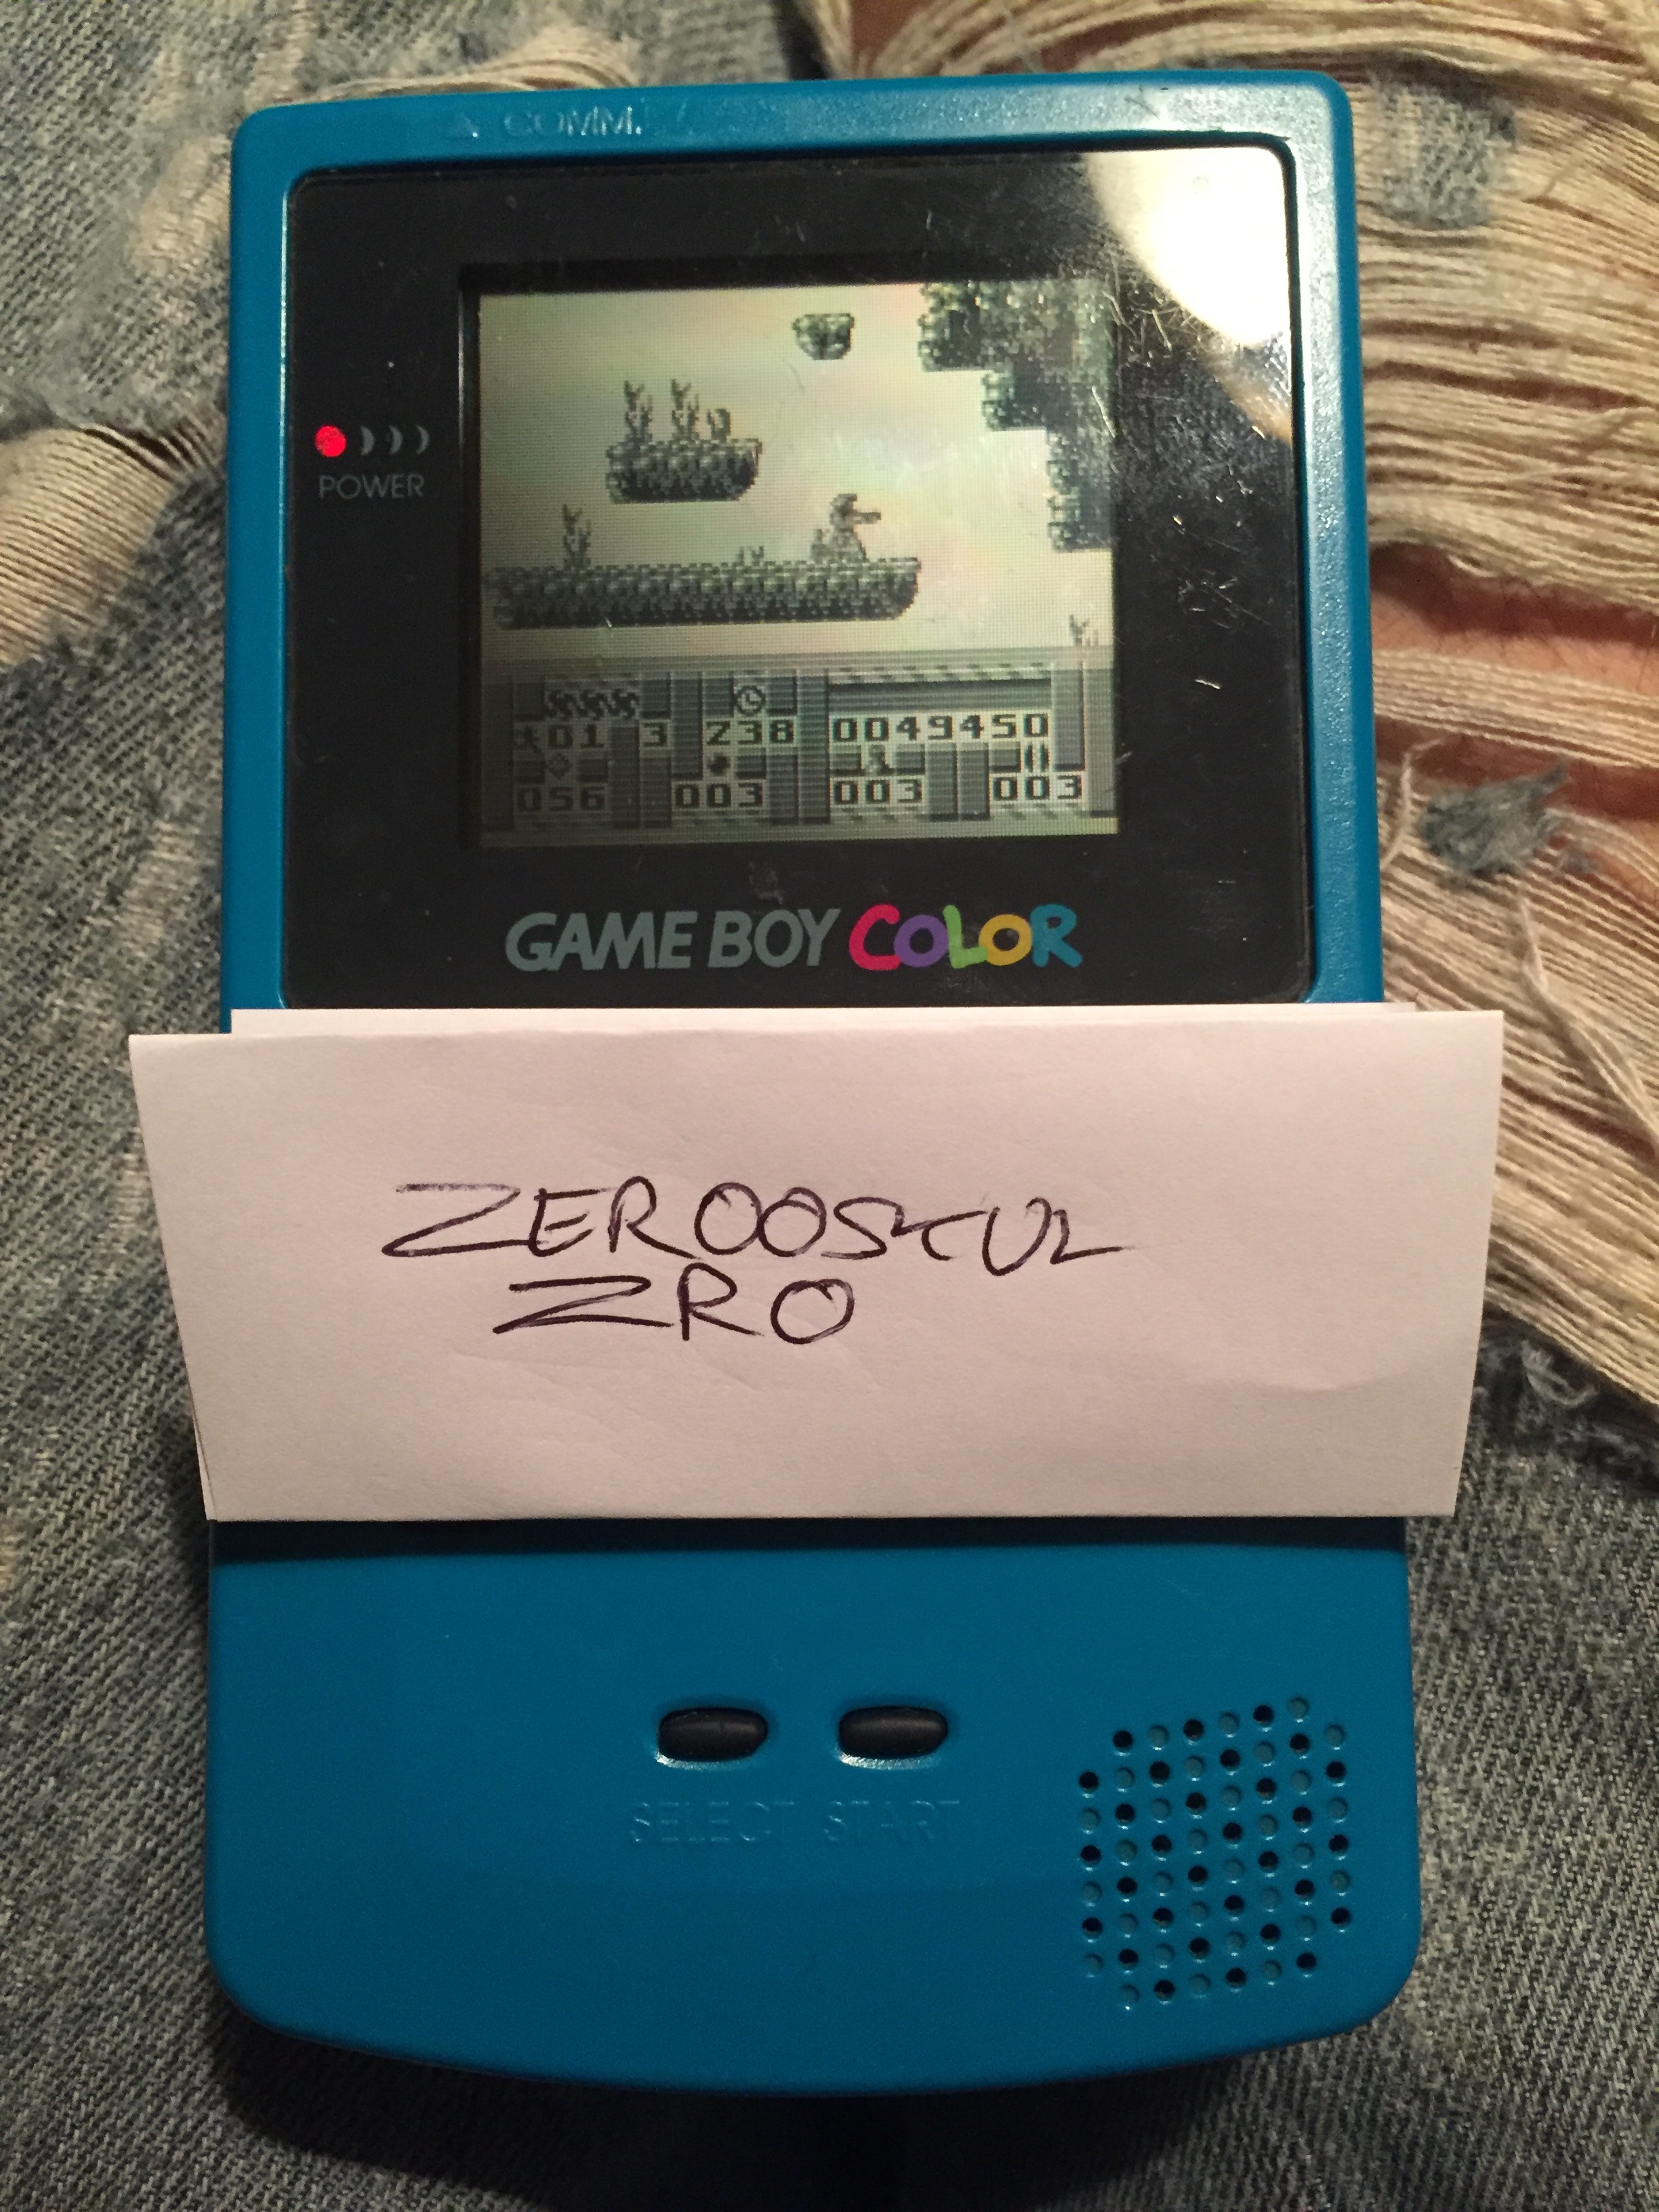 zerooskul: Turrican (Game Boy) 121,300 points on 2018-05-26 10:36:12